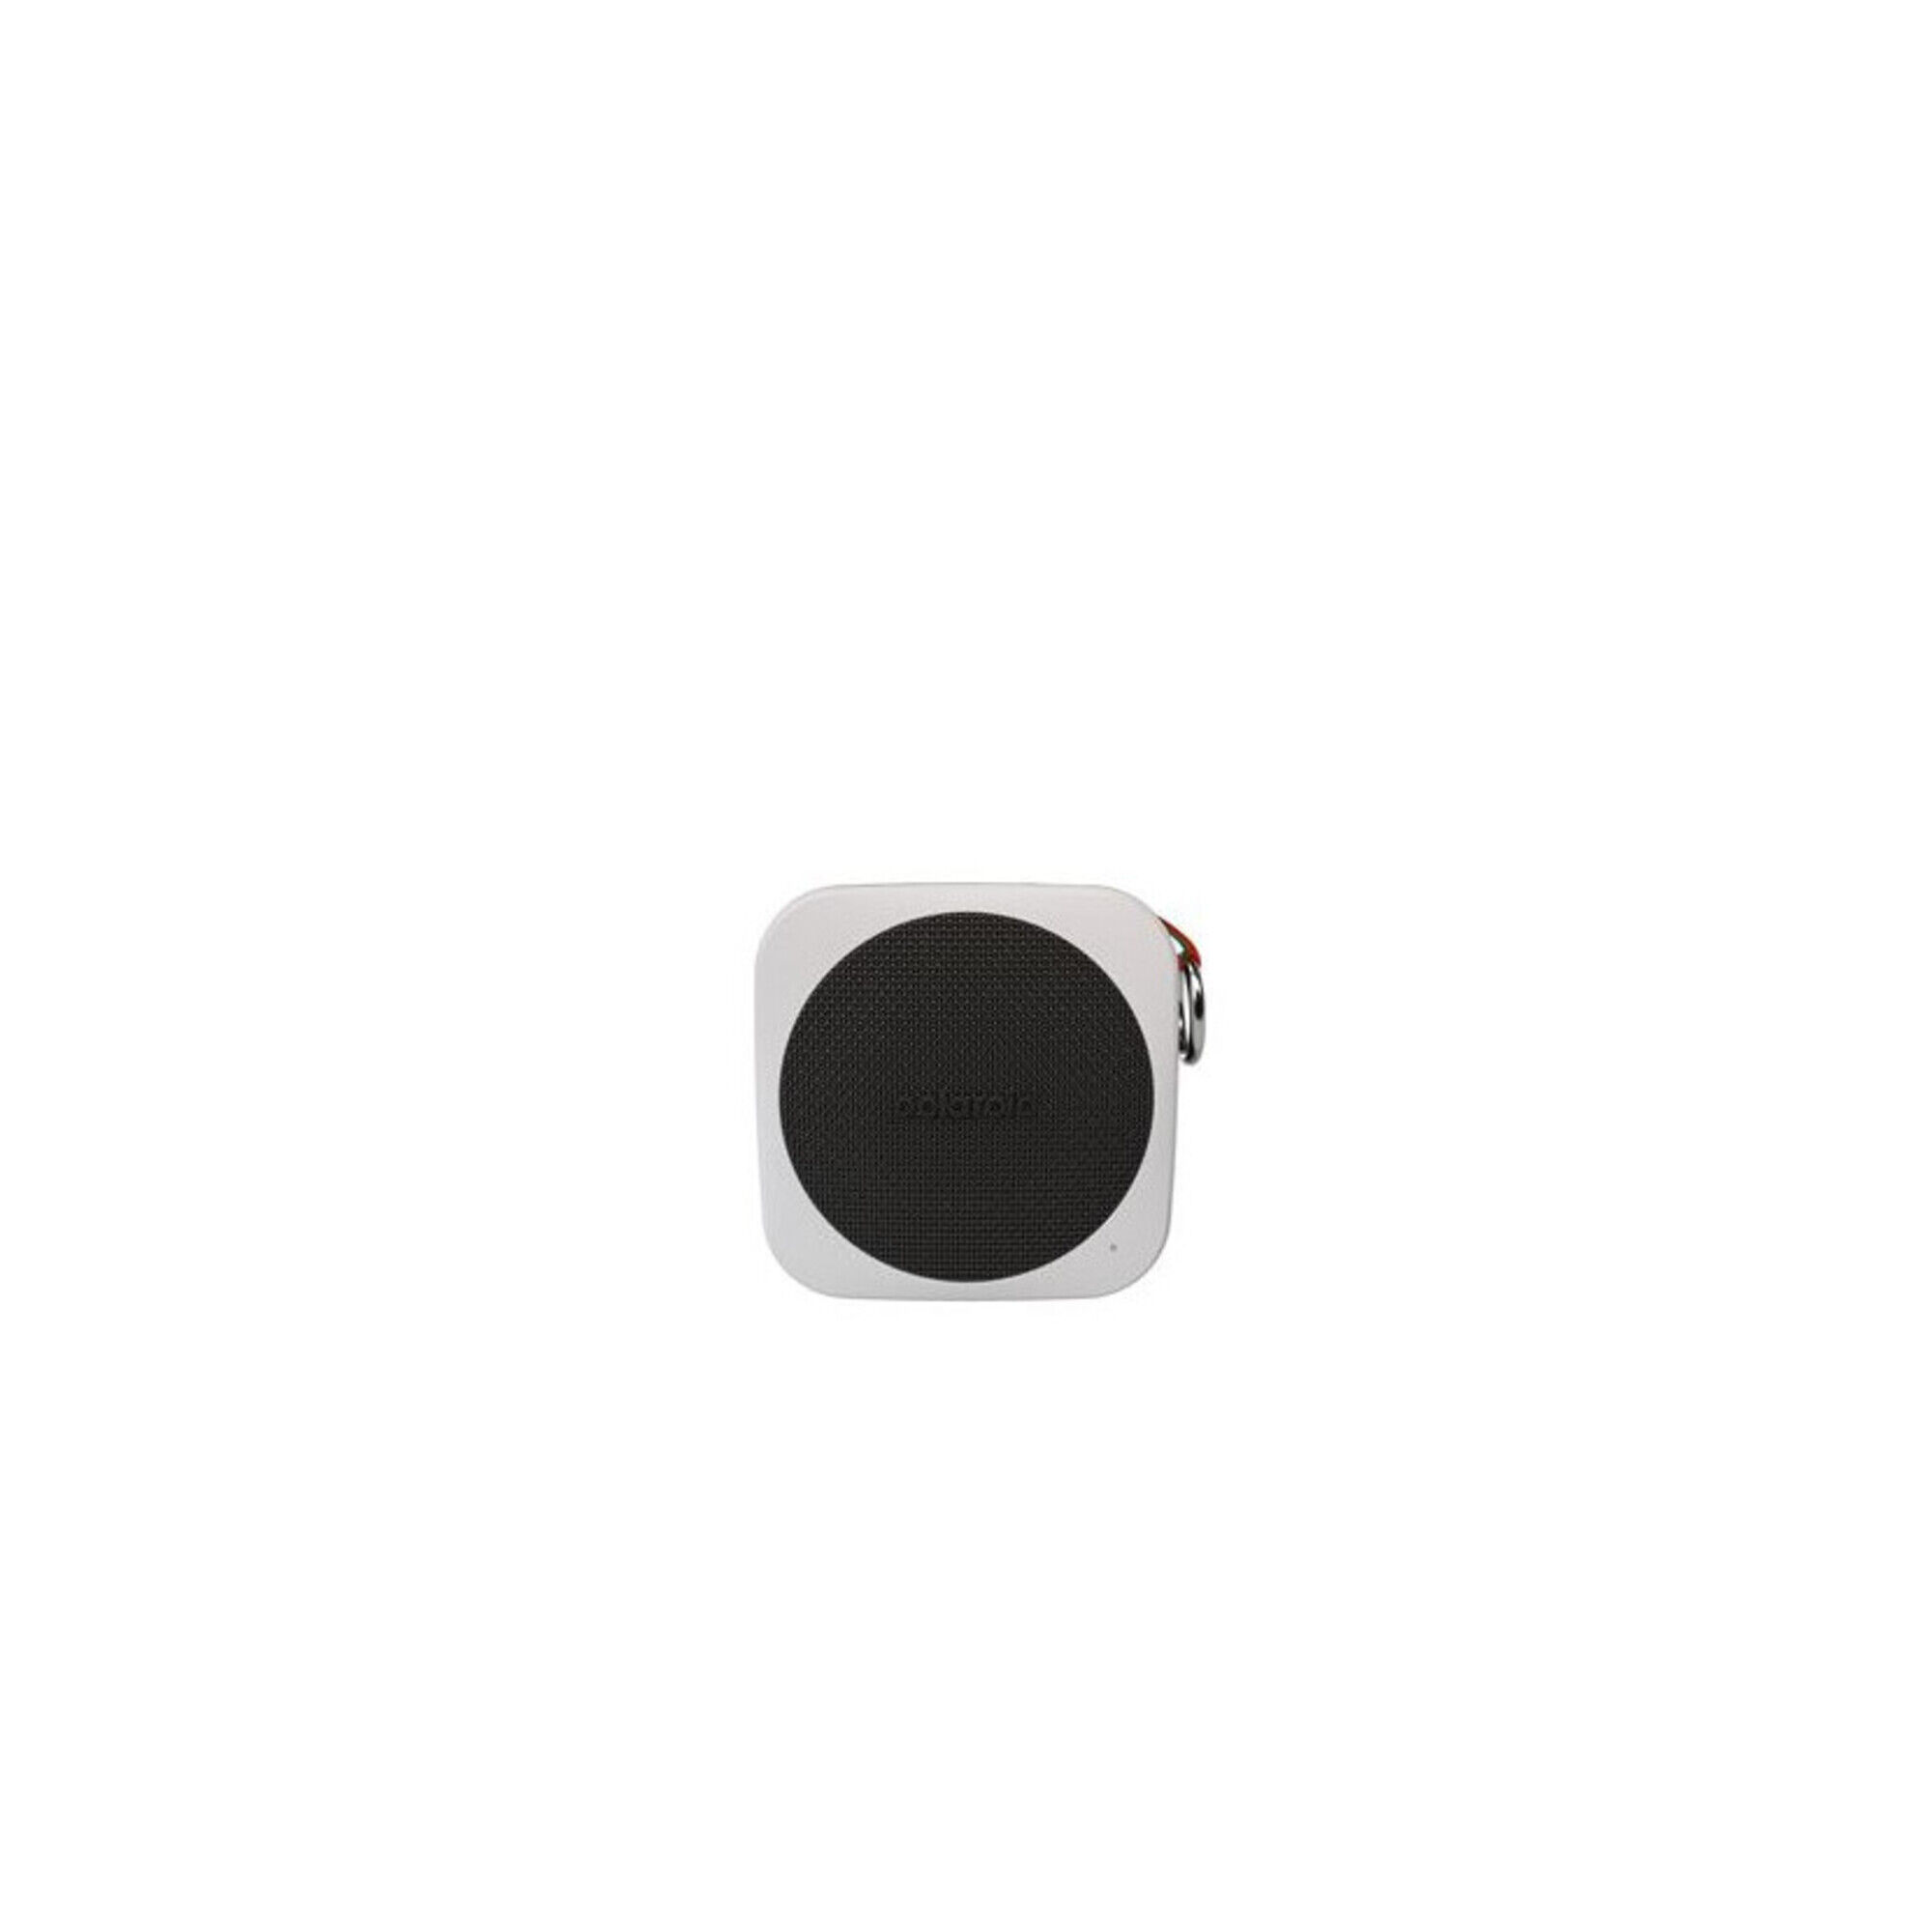 Enceinte sans fil Bluetooth Polaroid Music Player 1 Noir et blanc - Neuf